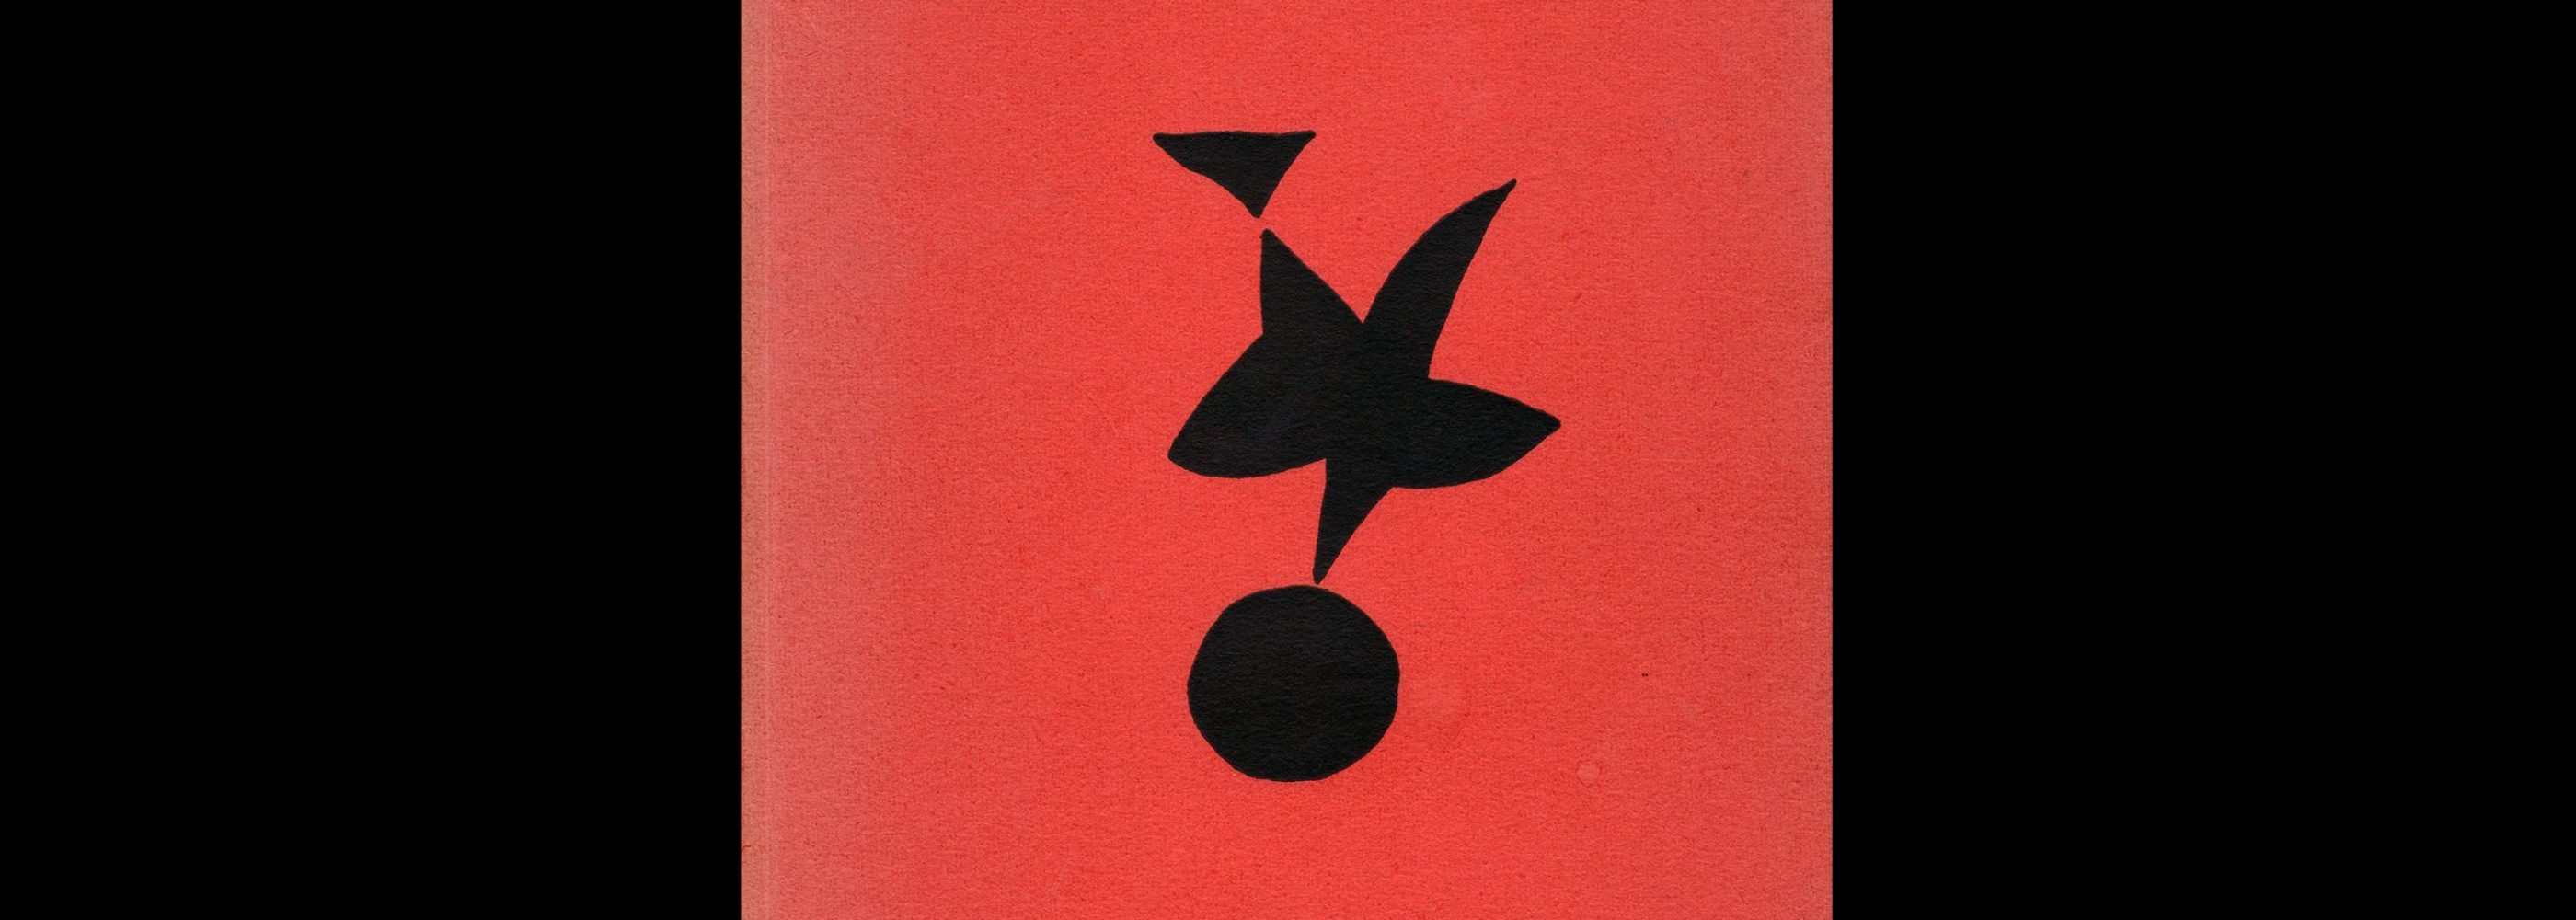 Ugo Pirogallo: Intime Reise, 1945 designed by Max Bill